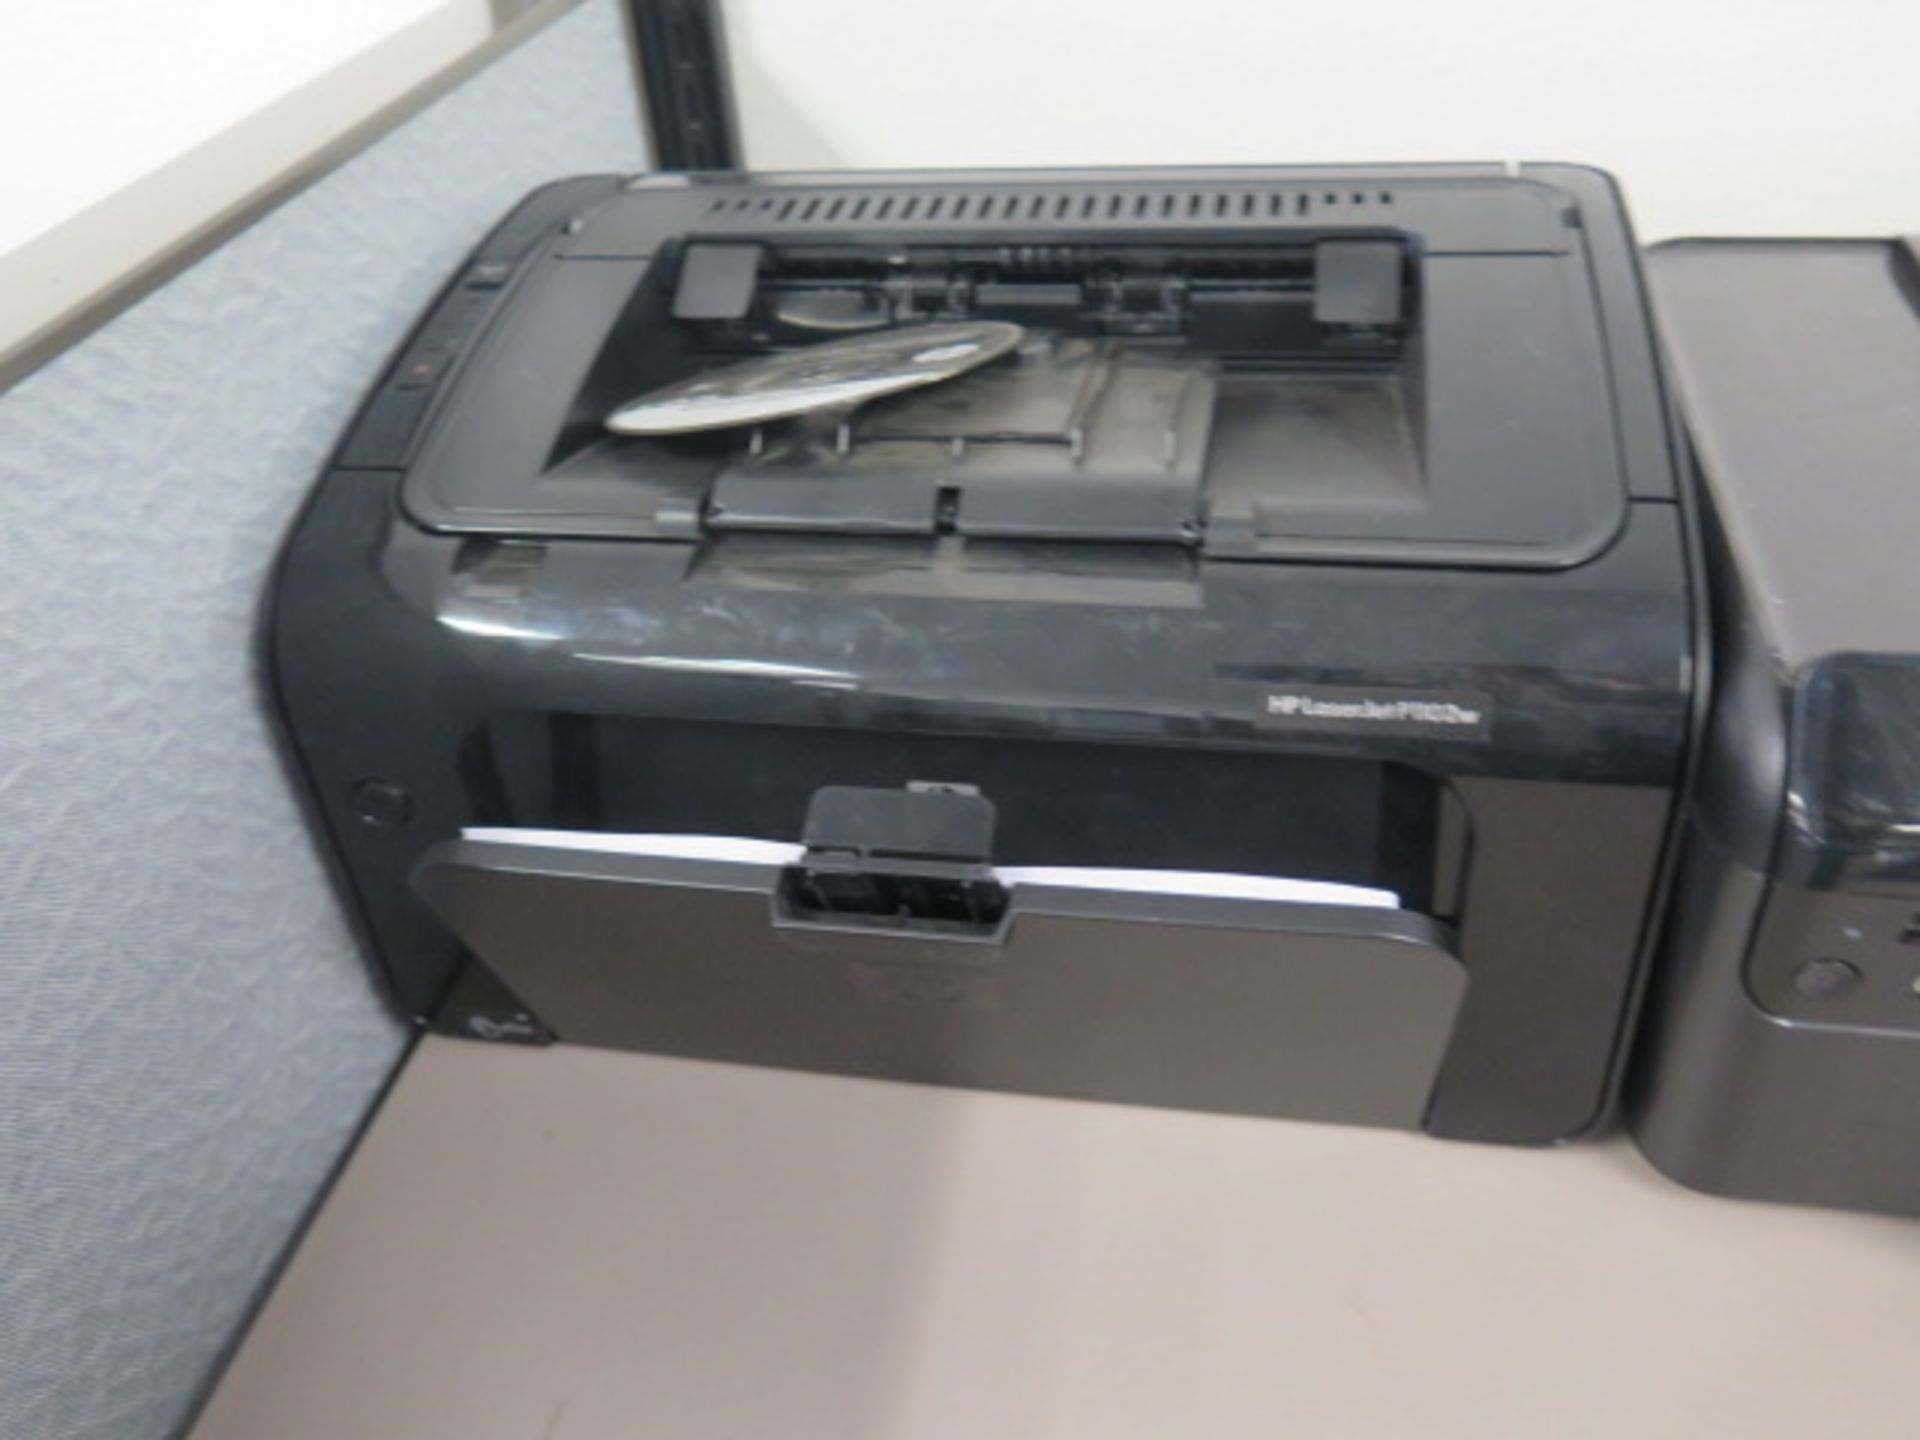 HP Photosmart C4780 and Laserjet P1102w Printers - Image 3 of 3